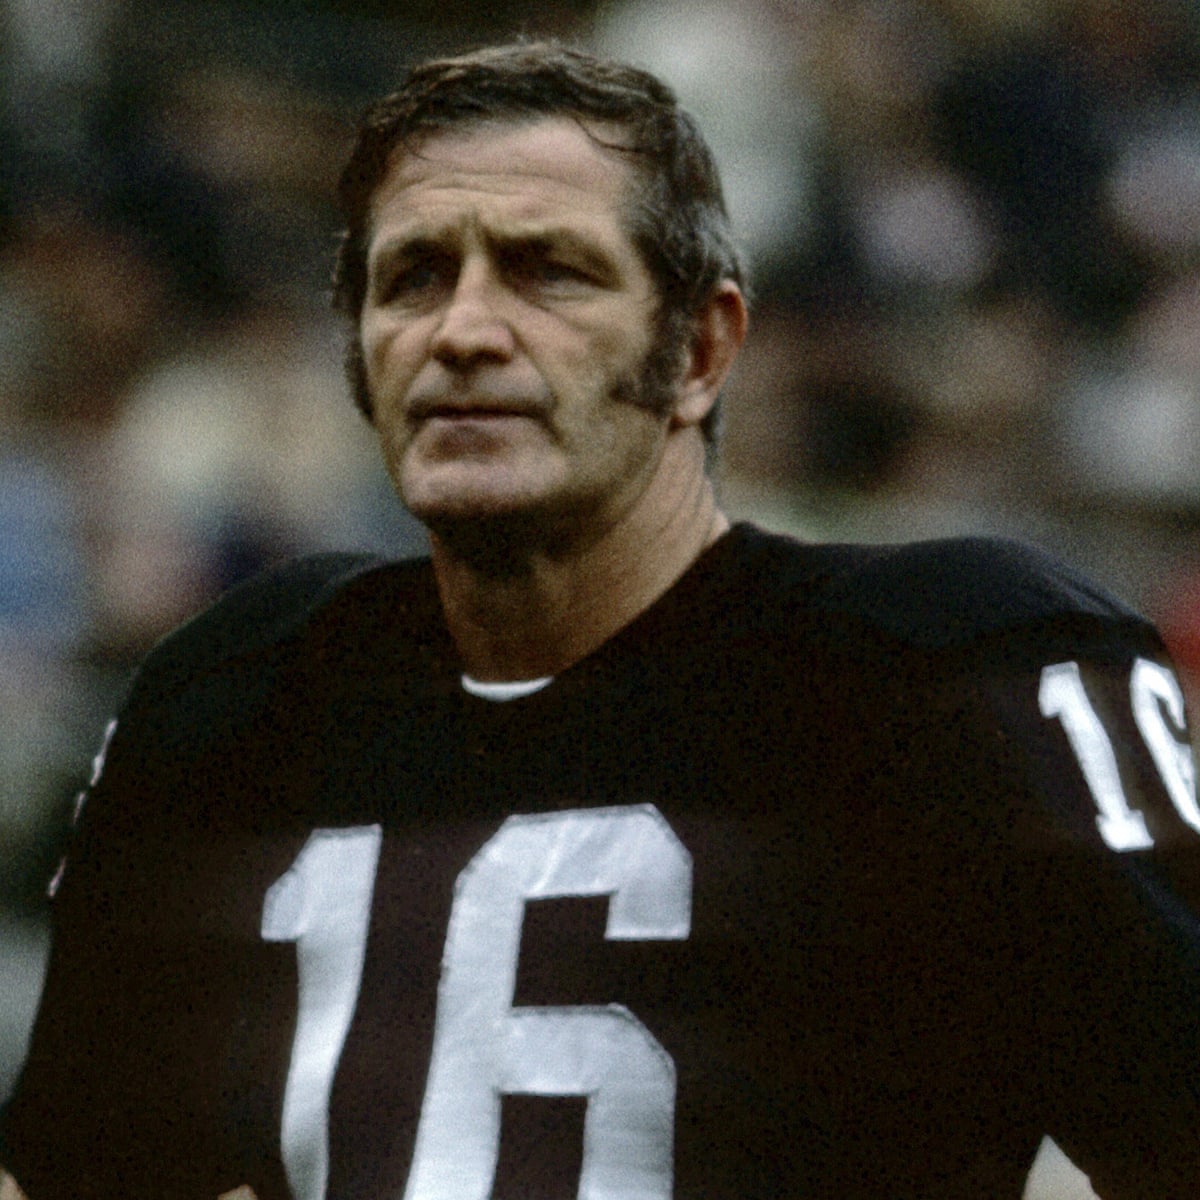 Ranking the best NFL quarterbacks of the 1970s